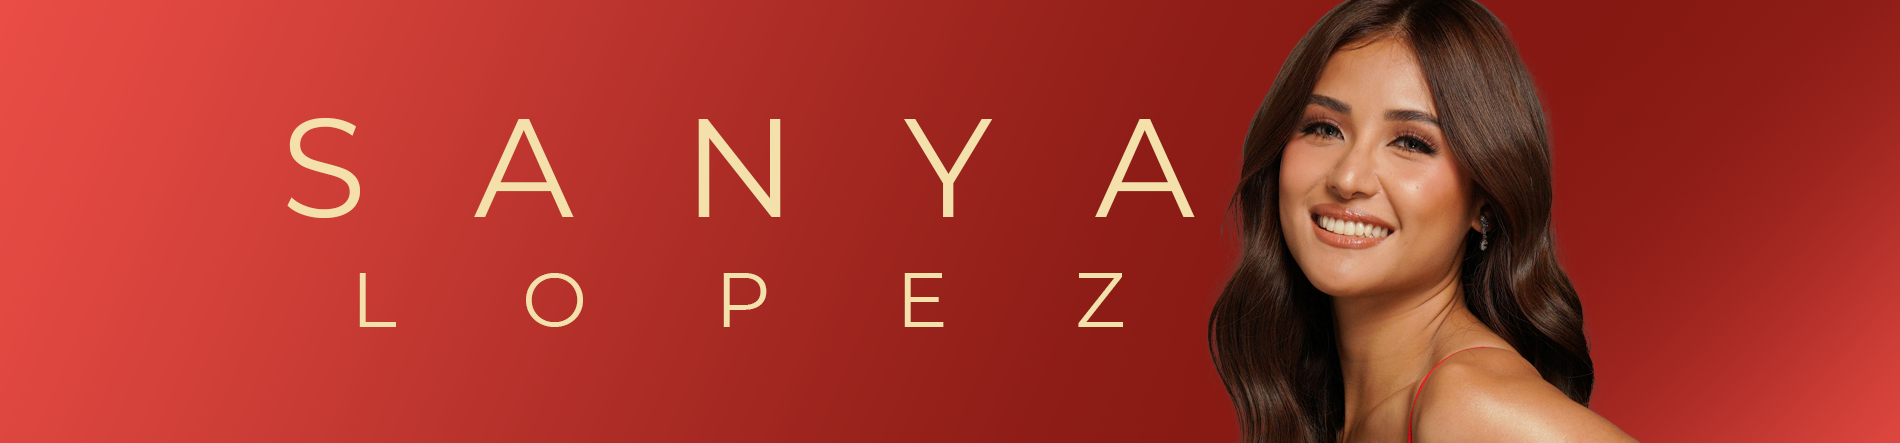 Sanya Lopez Desktop Banner